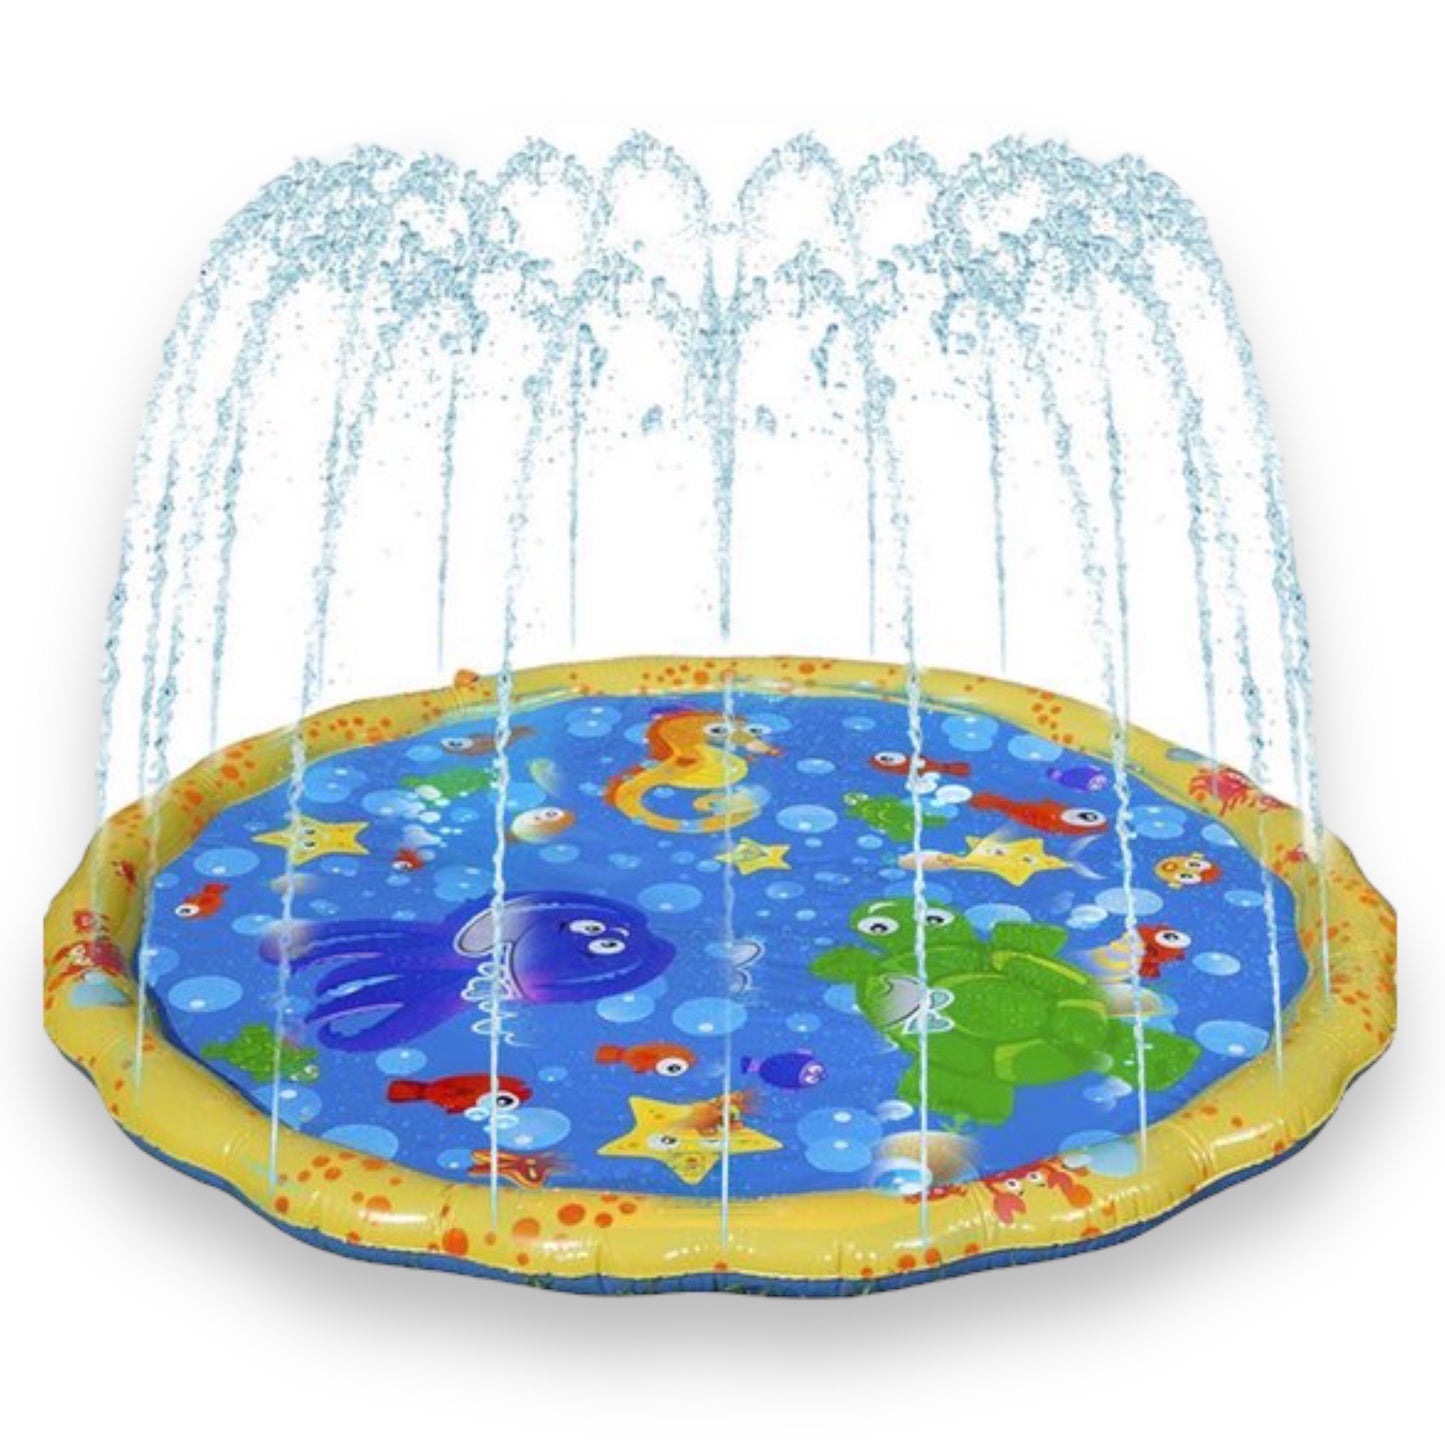 Banzai Sprinkle 'N Splash Waterspeelmat - Perfect voor peuters om op een speelse manier aan water te wennen